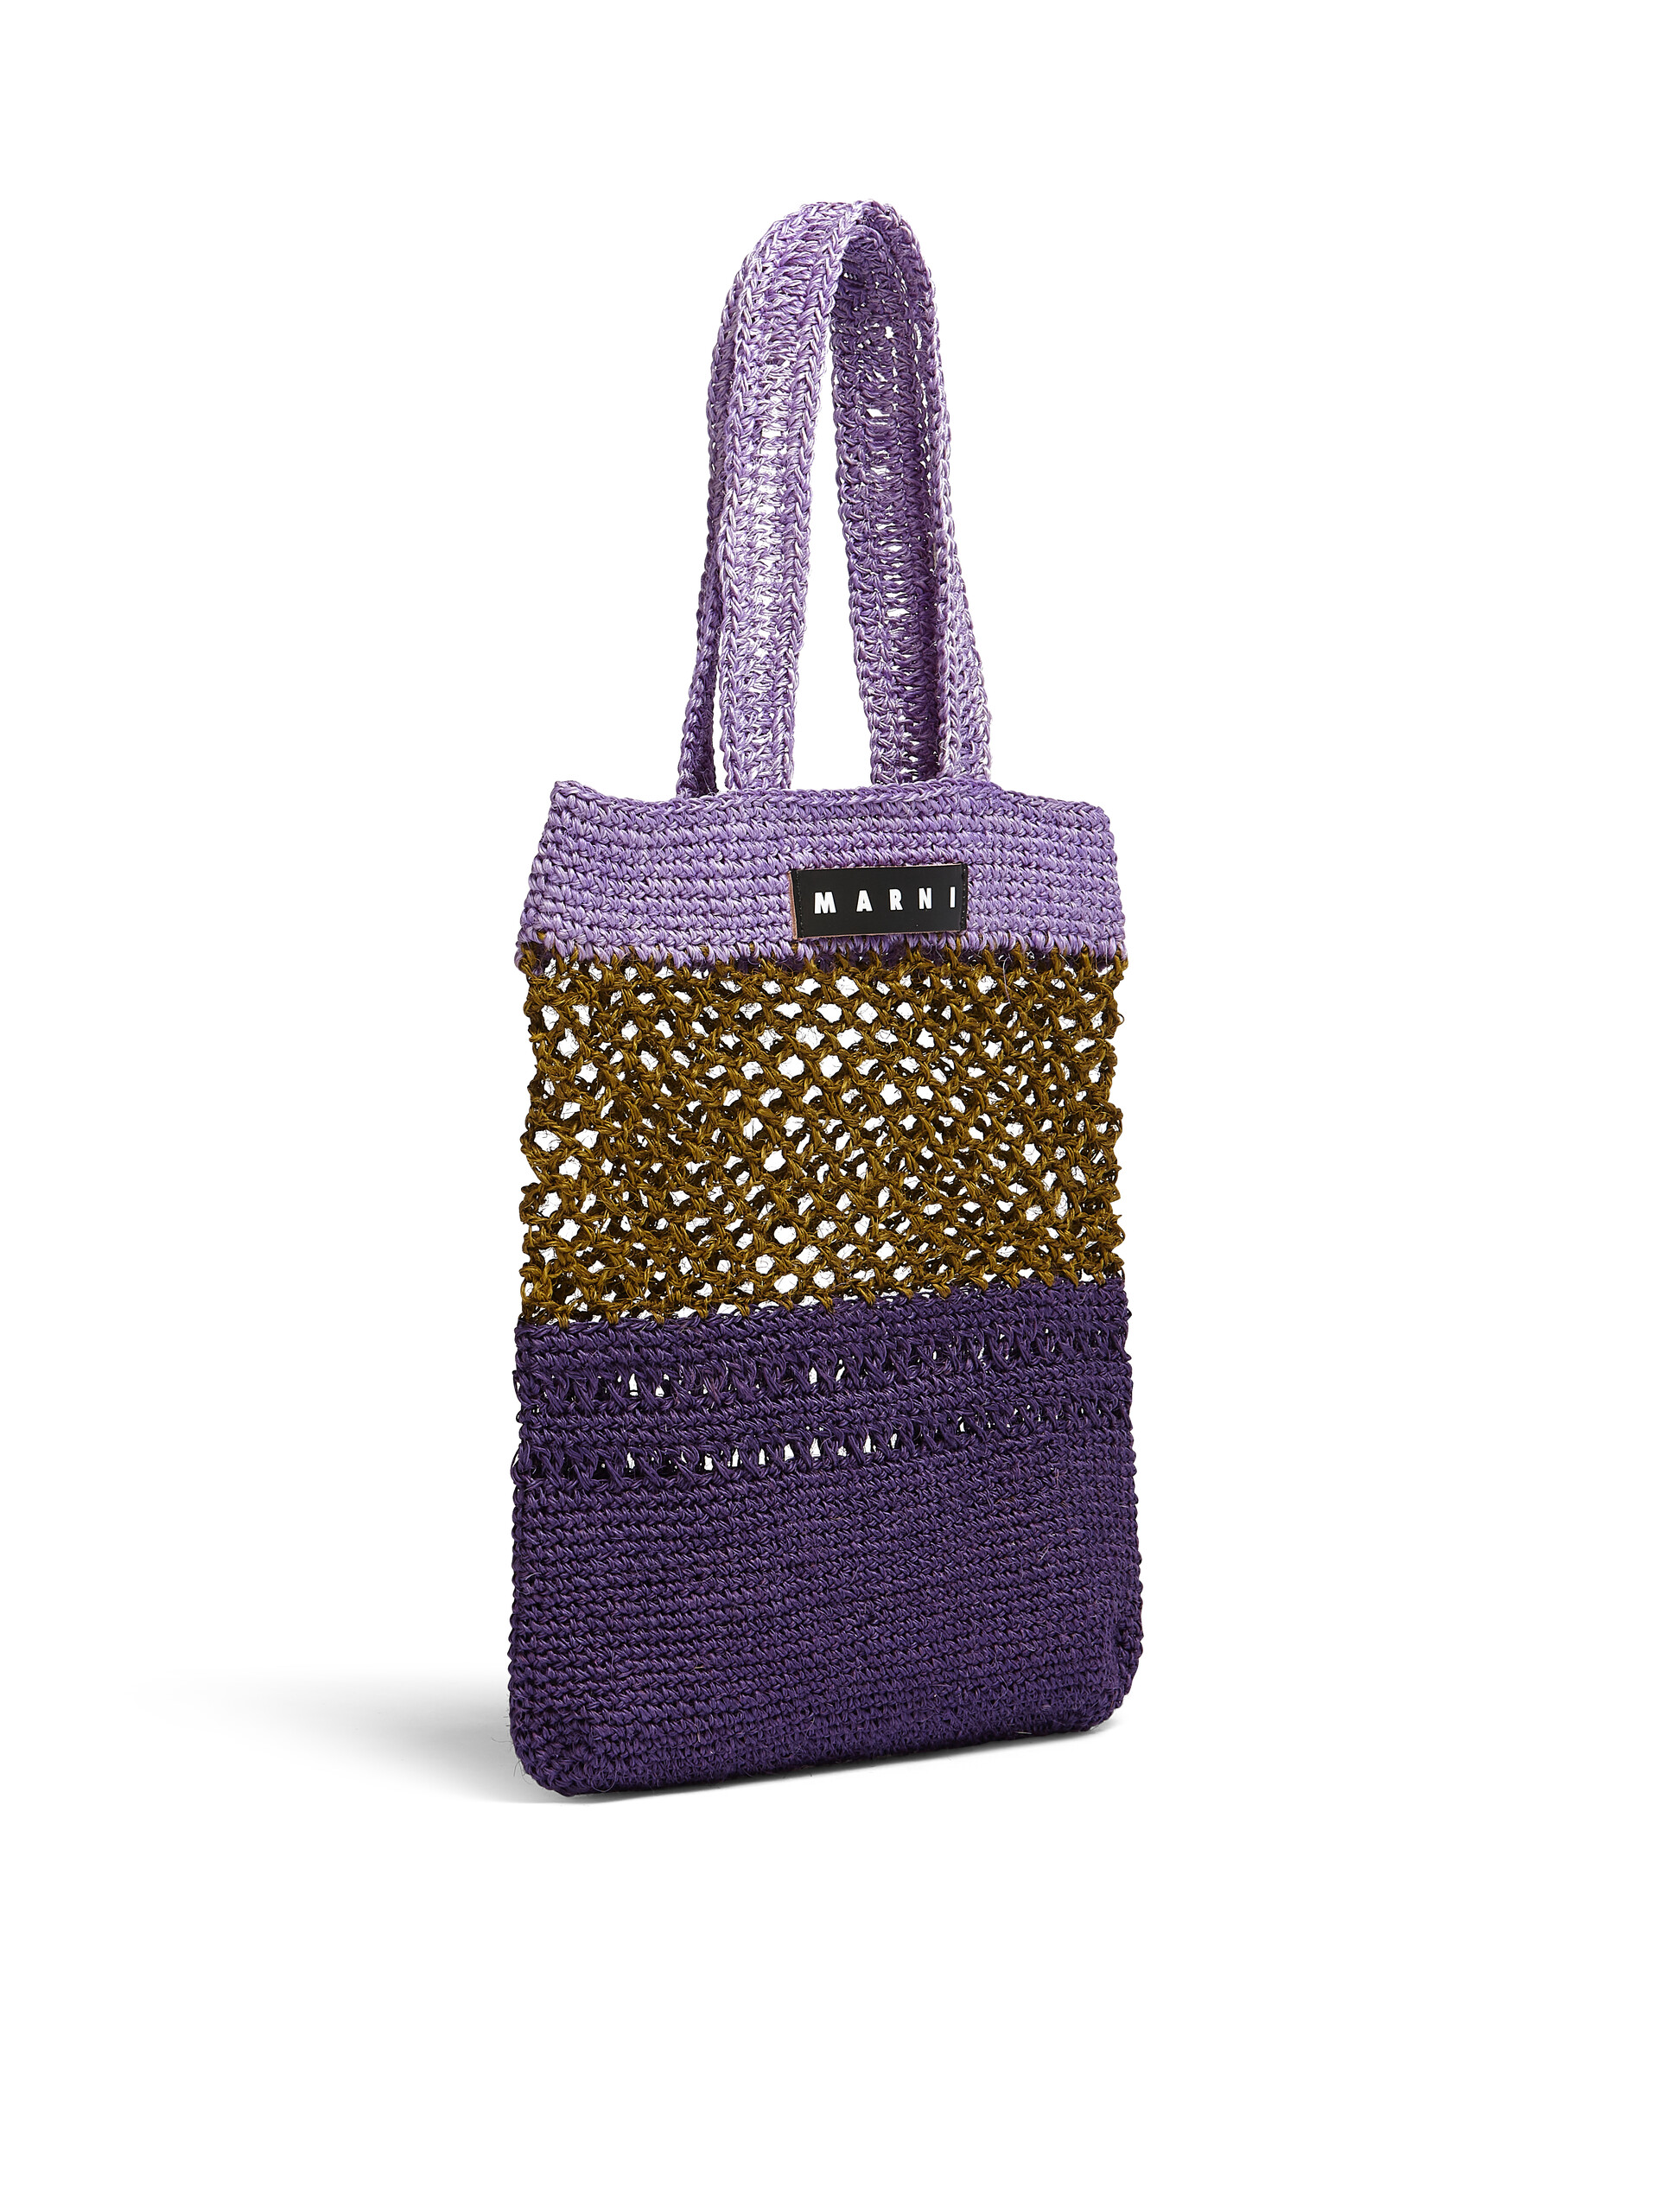 MARNI MARKET bag in purple and green natural fiber - Bags - Image 2